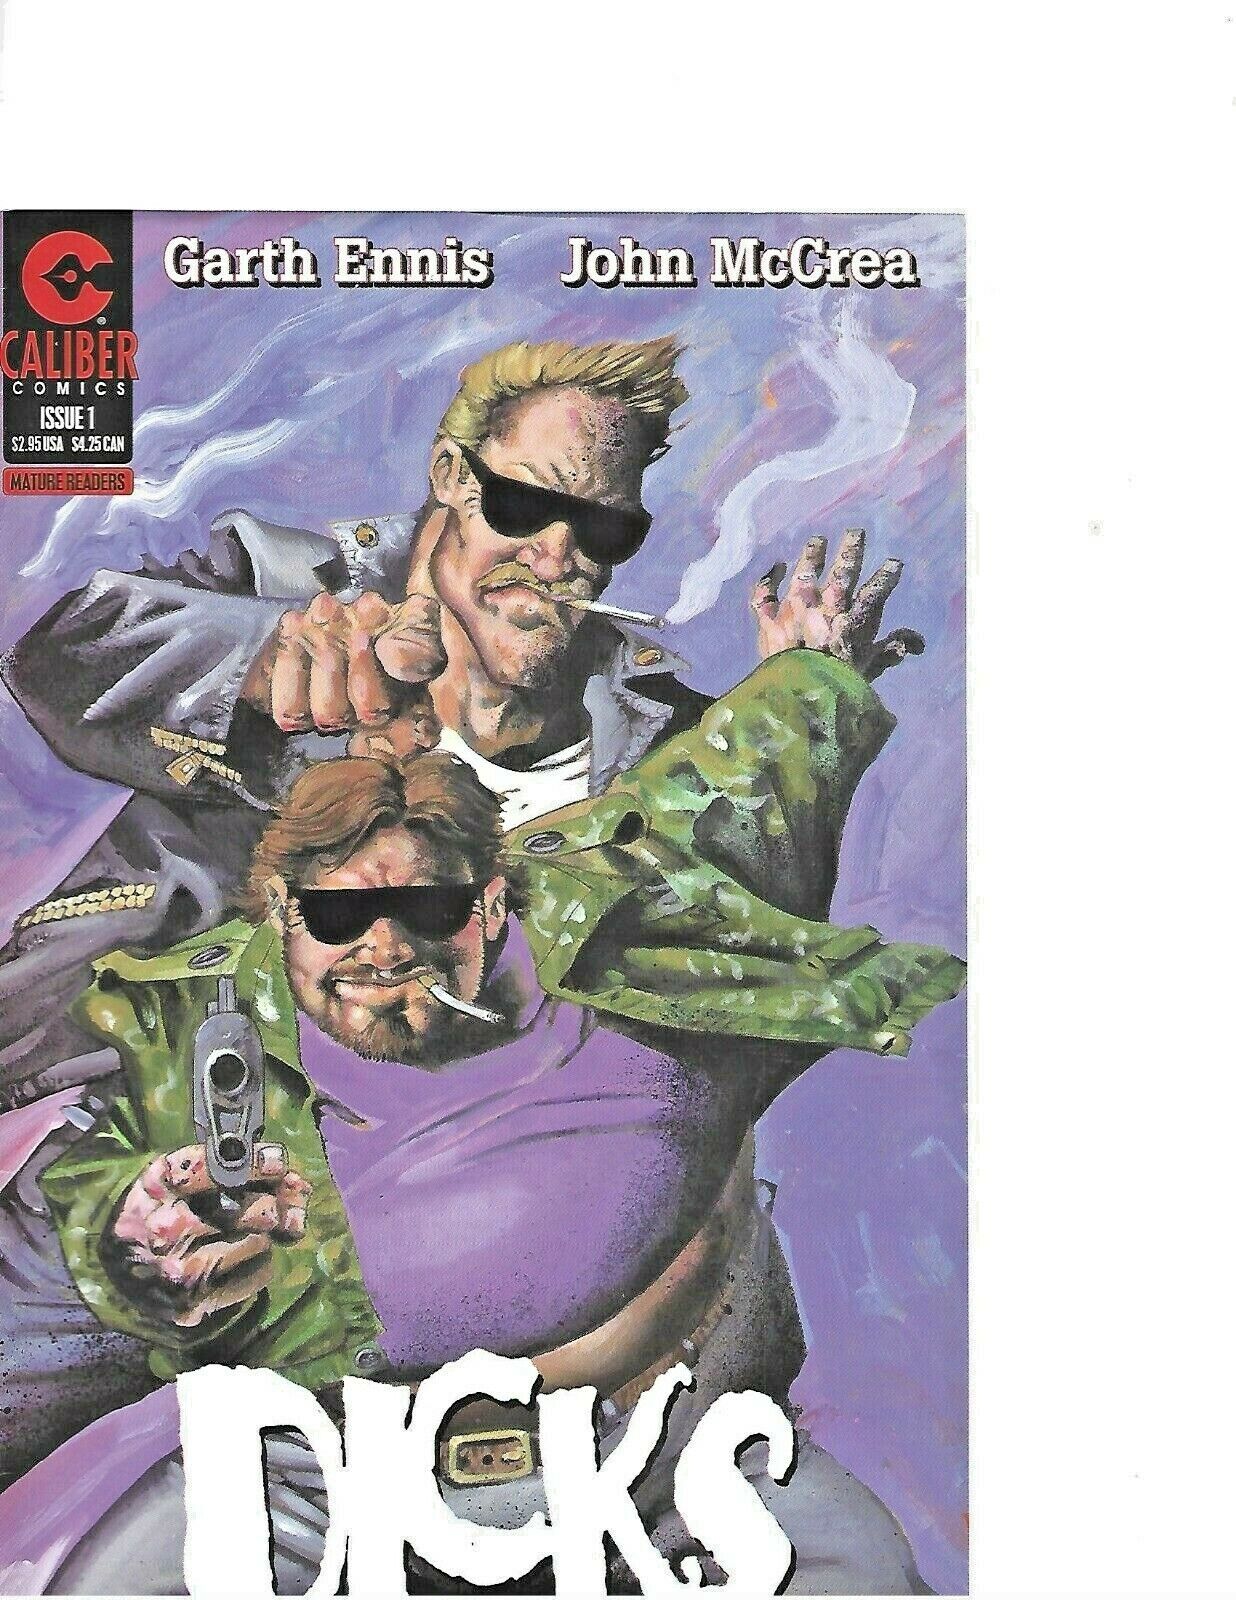 Dicks #1 and  BIGGER DICKS  by Garth Ennis John McCrea Caliber Comics  2 comics